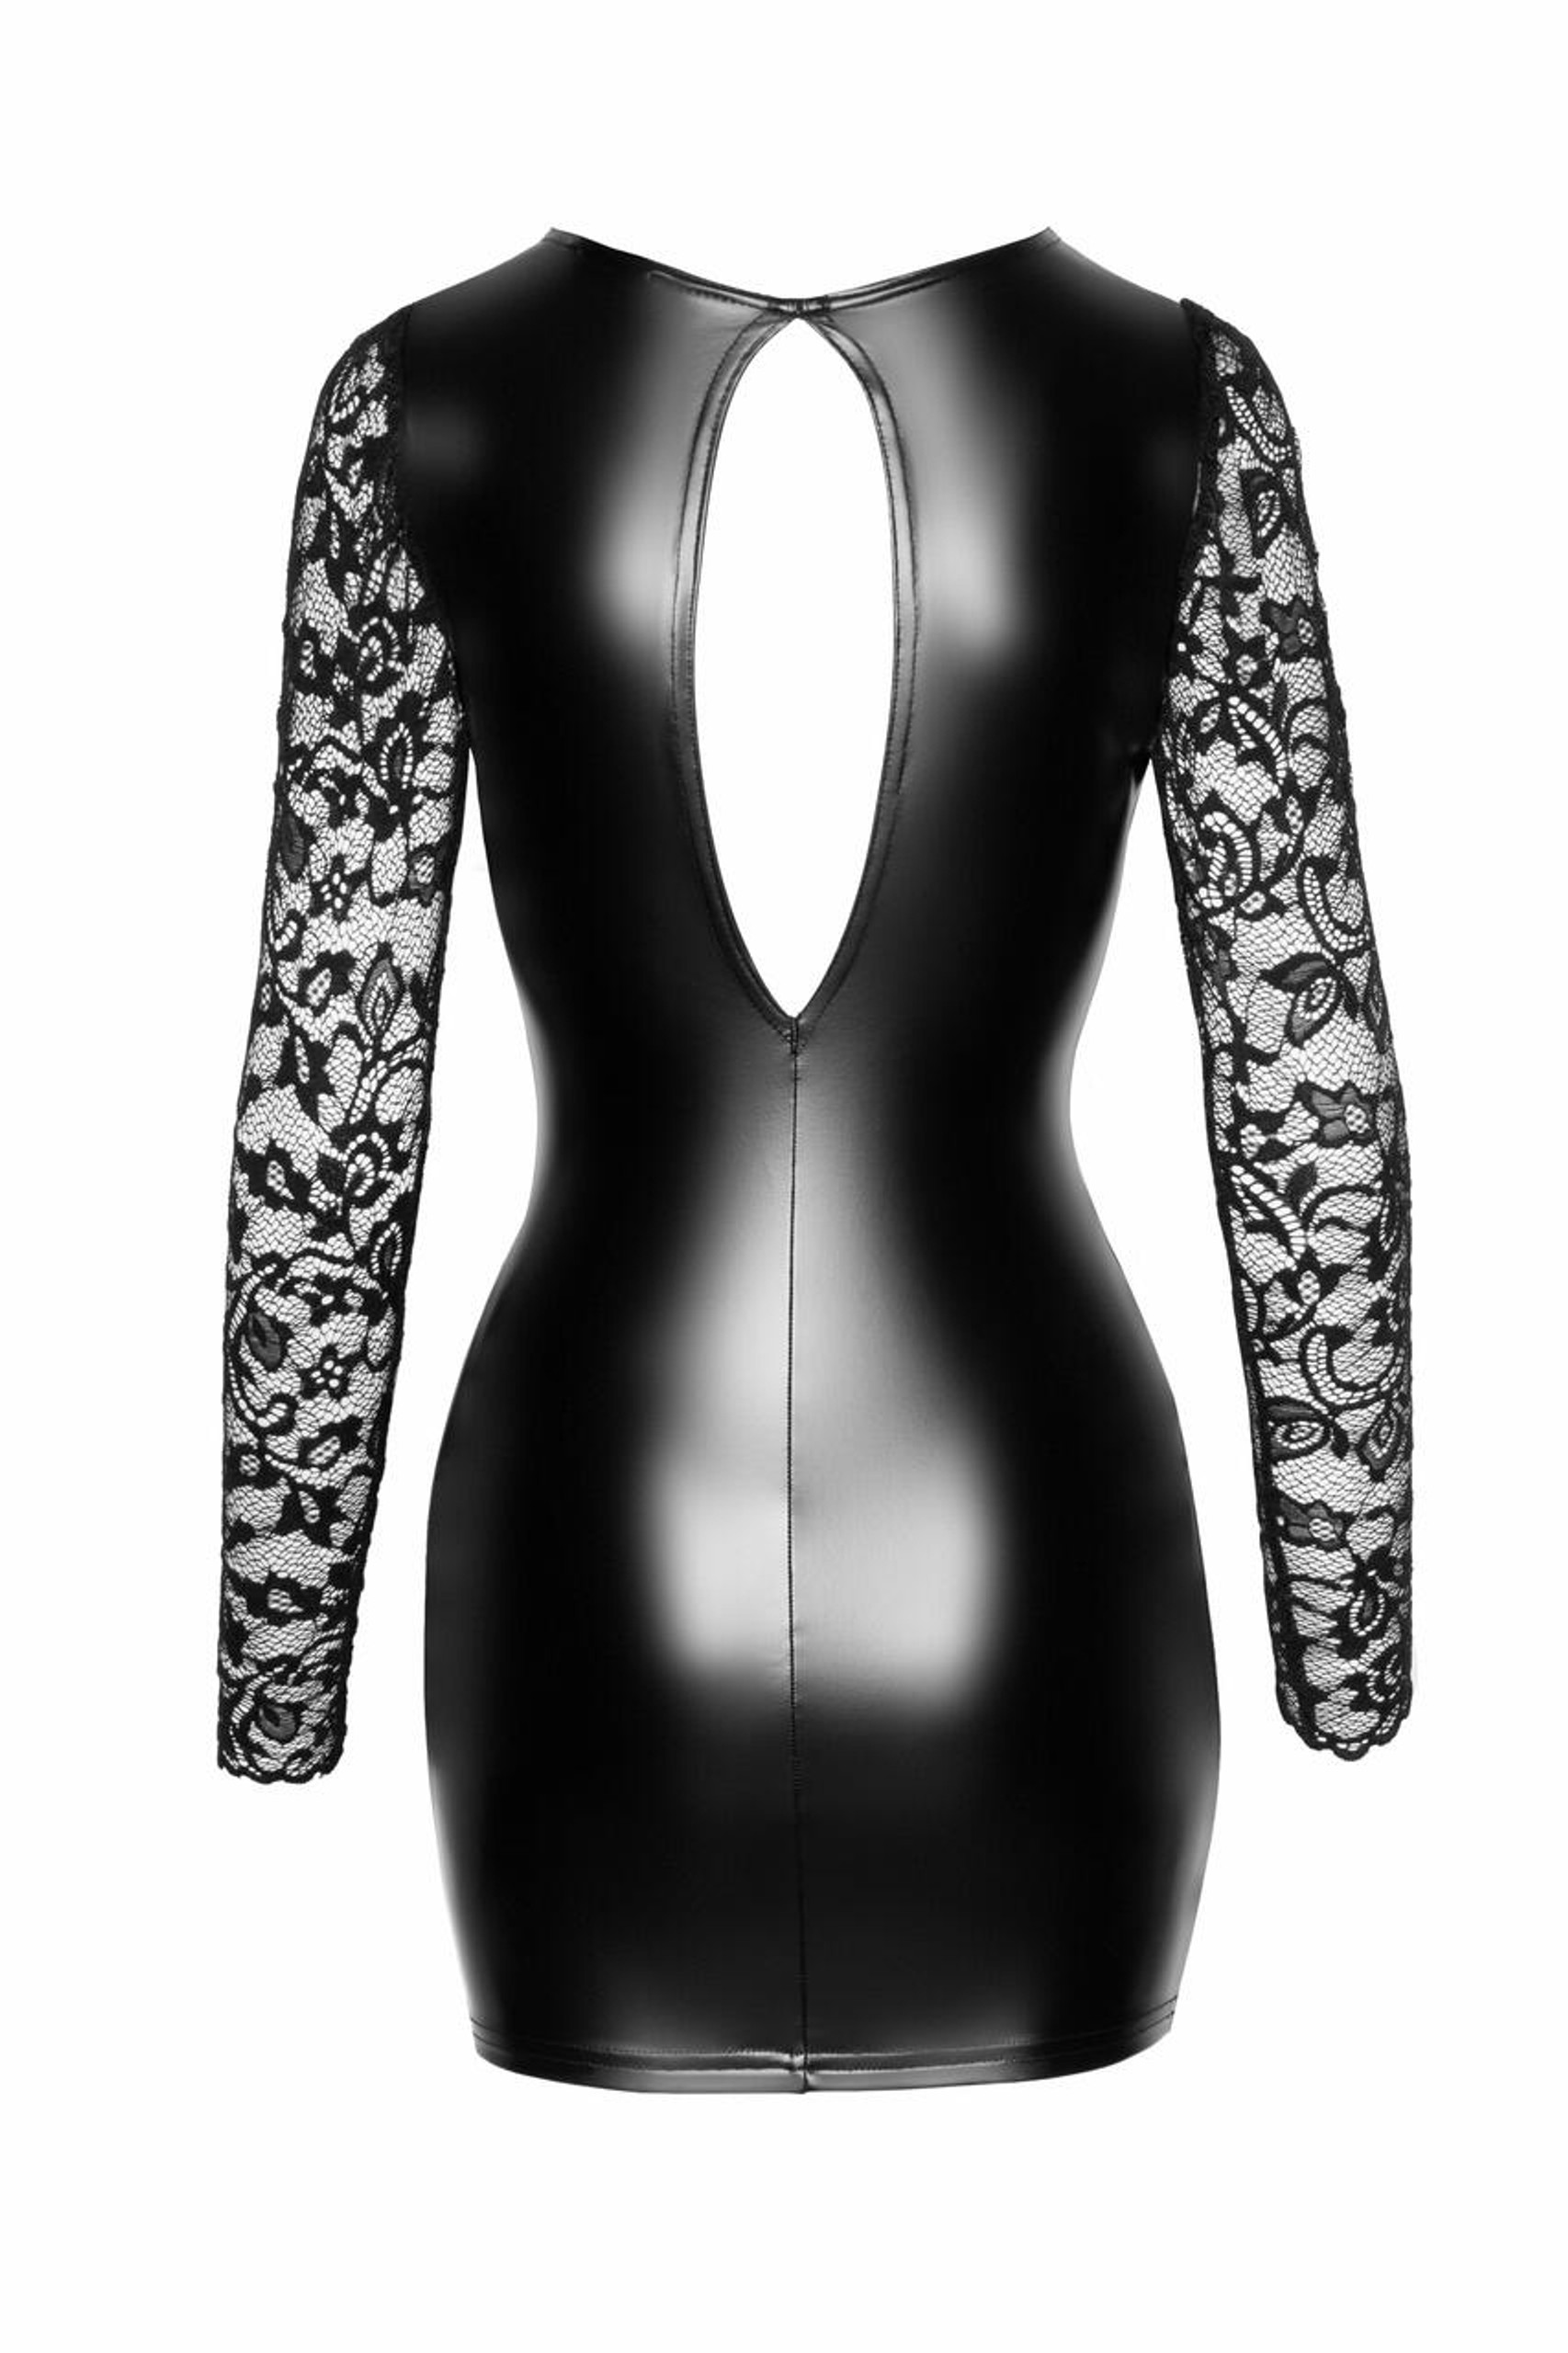 Noir Handmade F253 Short powerwetlook dress with lace sleeves